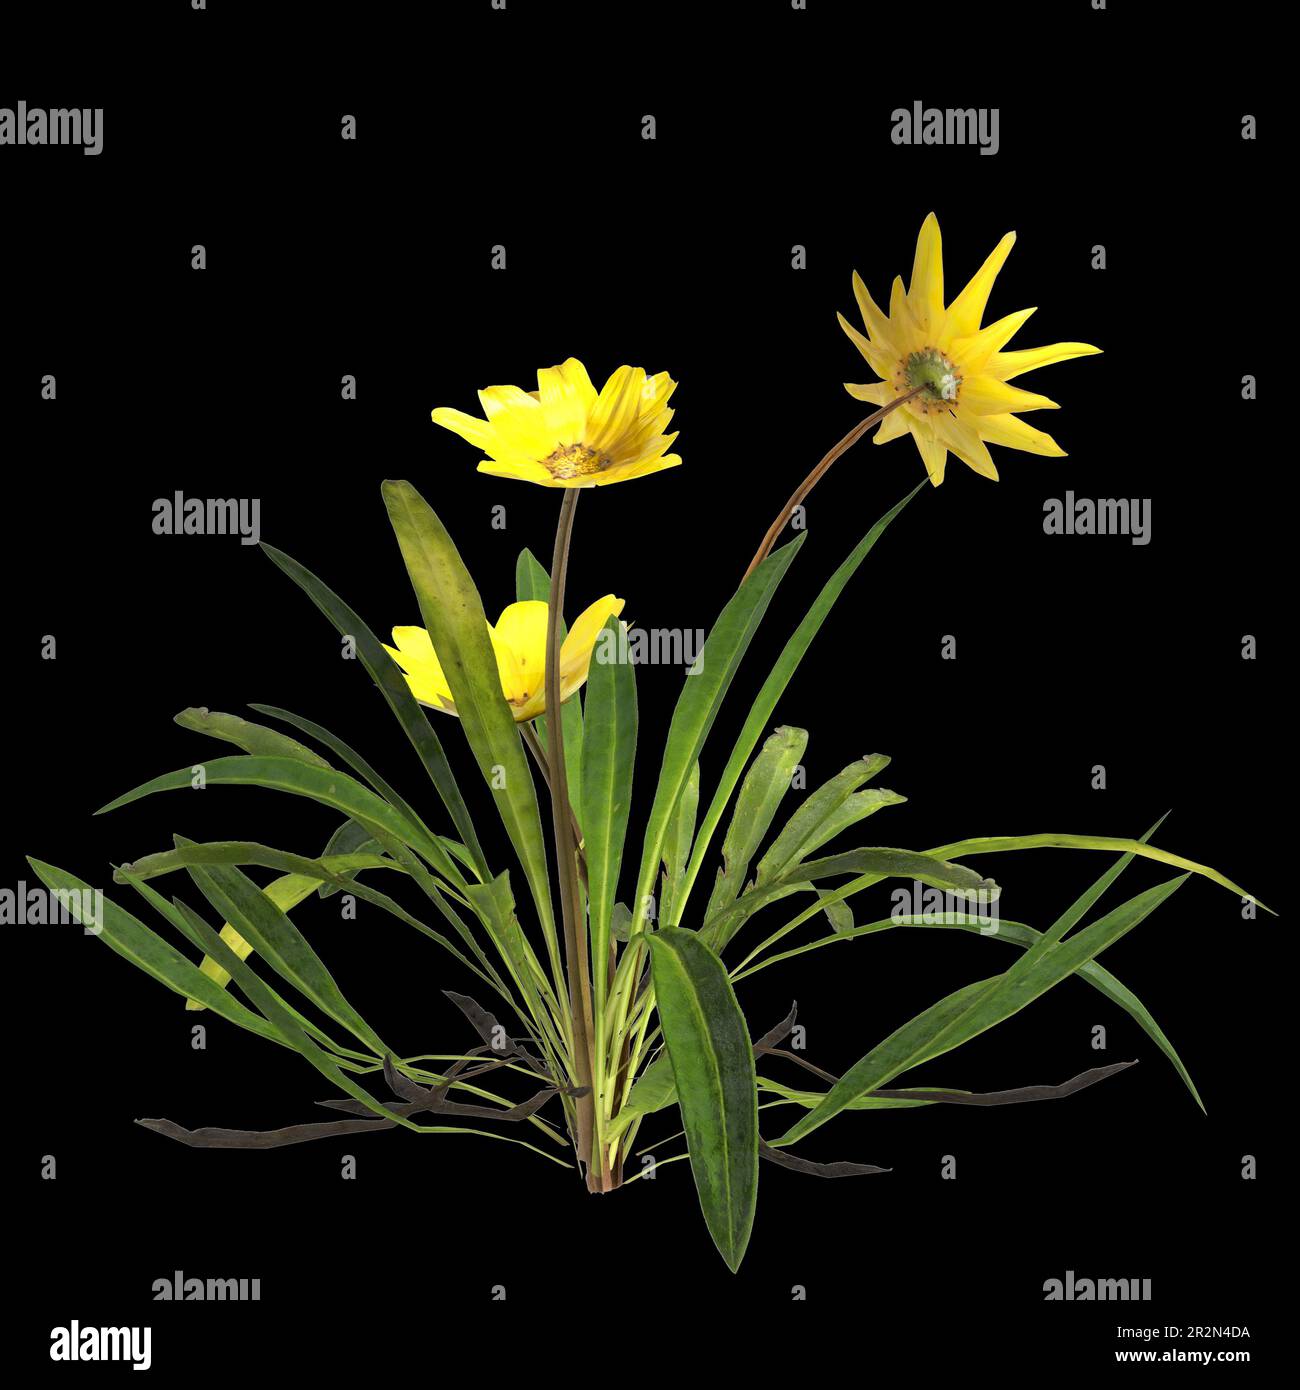 3d illustration of gazania linearis plant isolated on black background Stock Photo